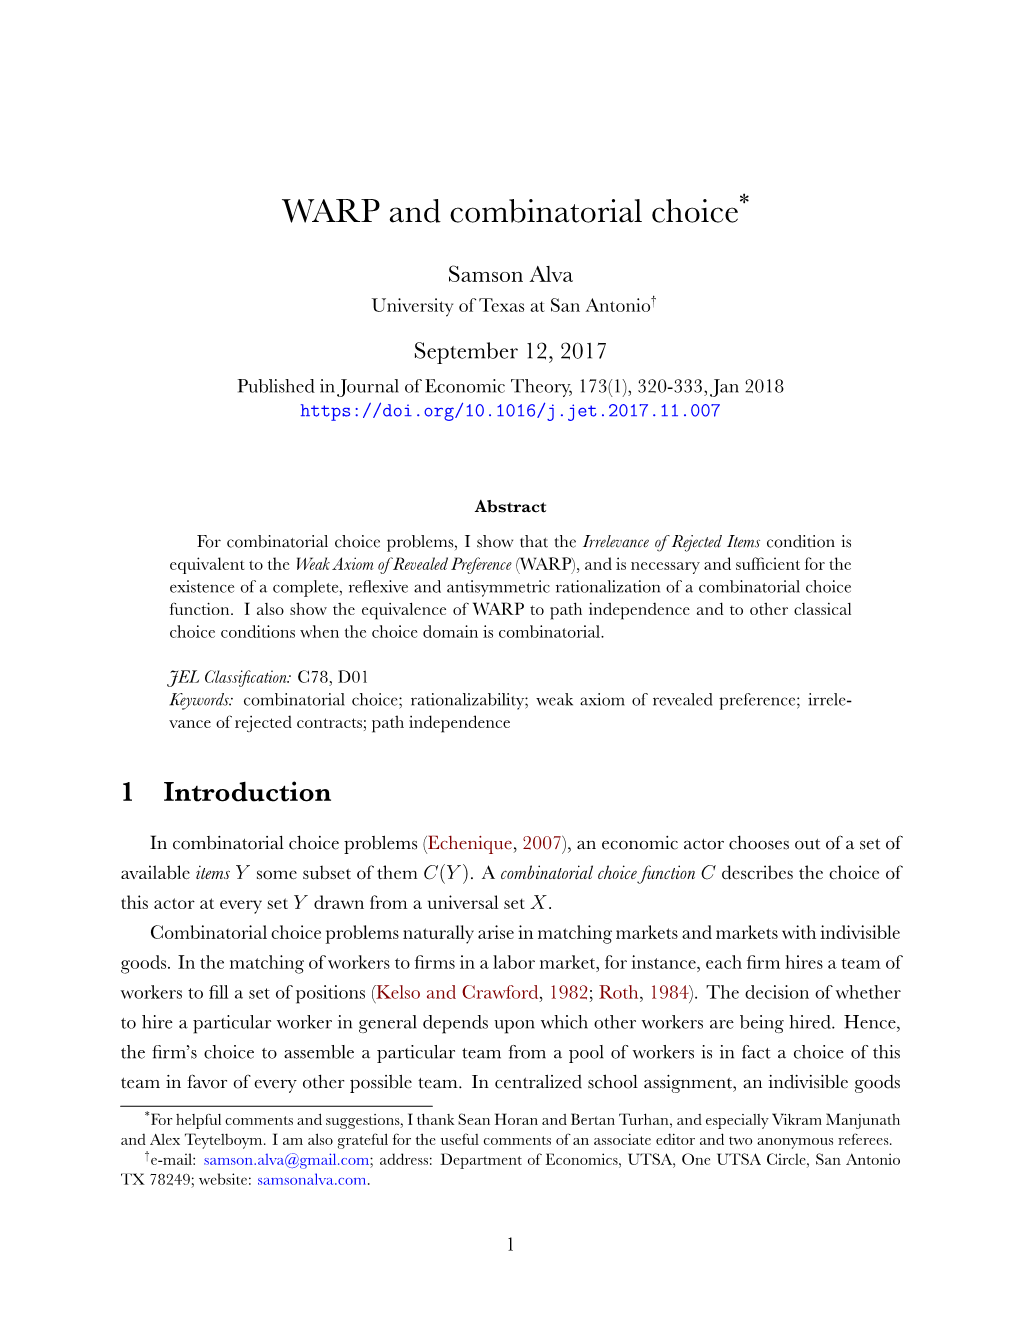 WARP and Combinatorial Choice*